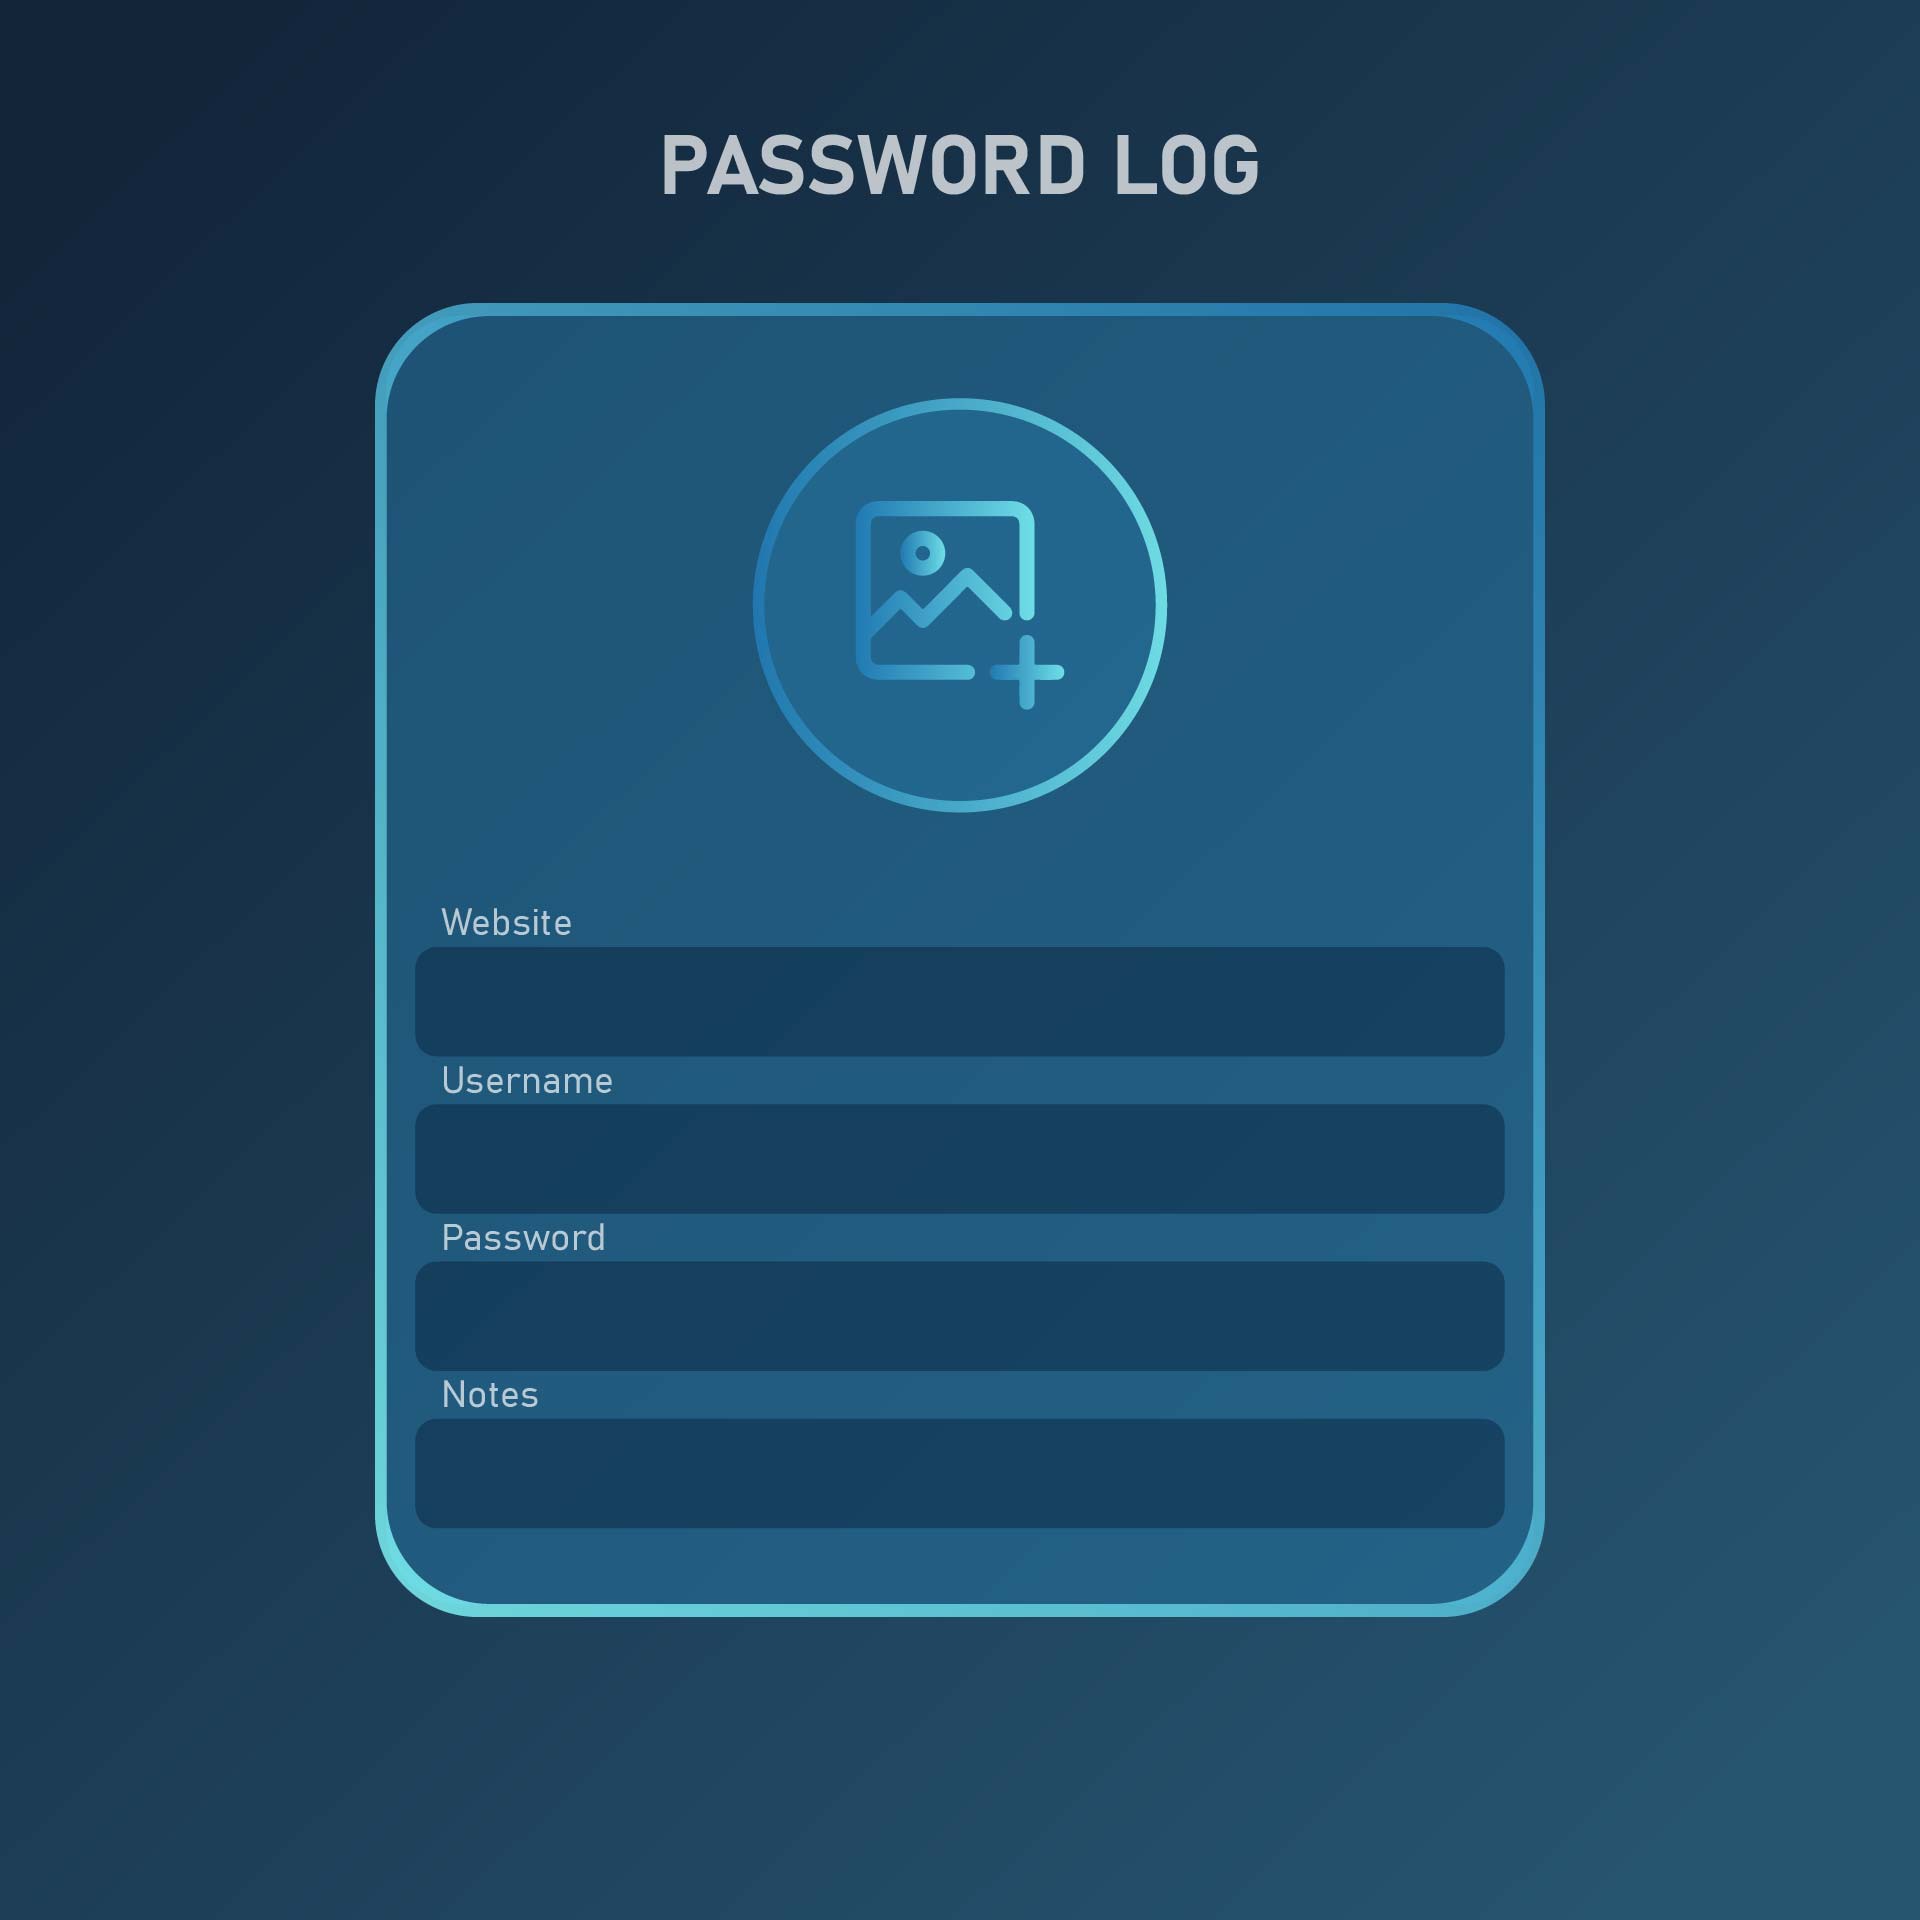 Printable Password Log